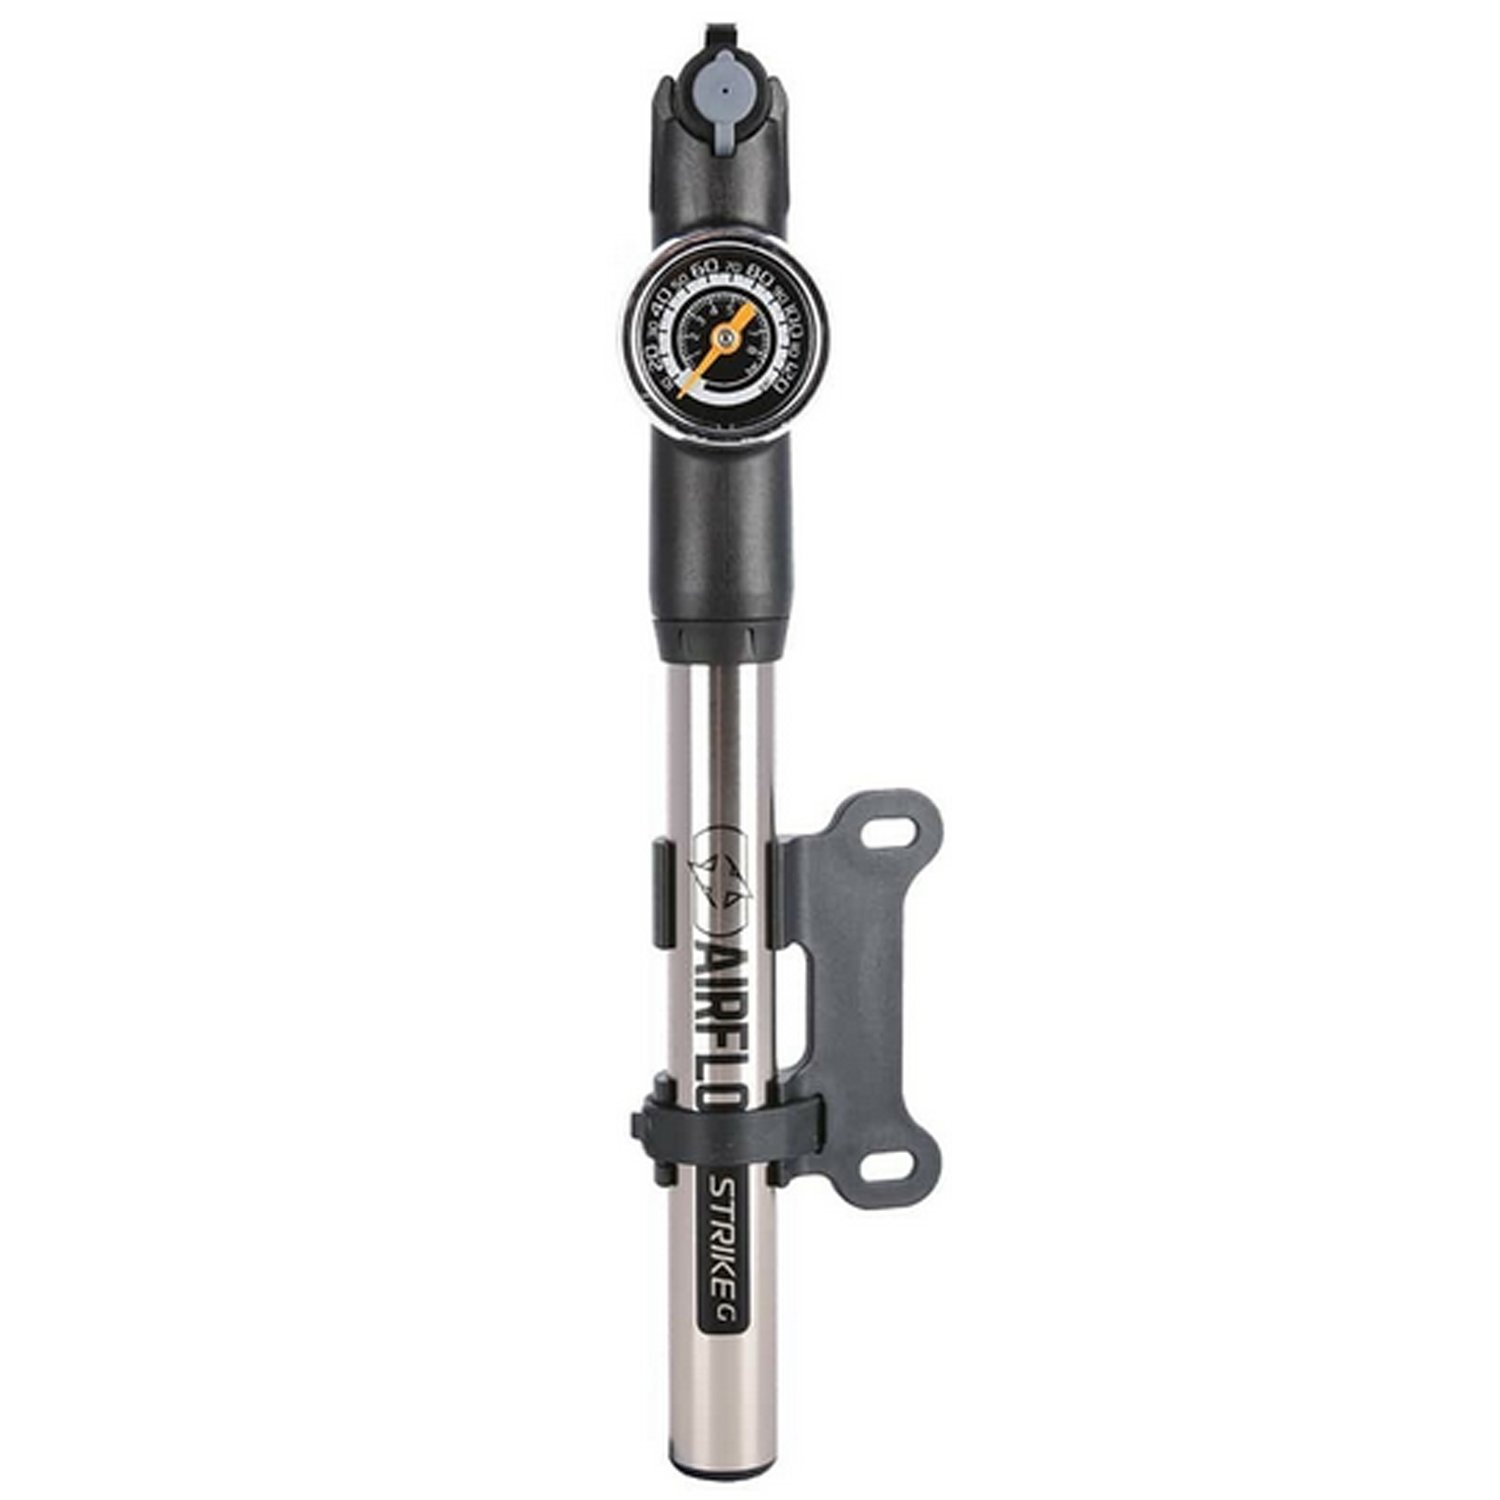 Велонасос Oxford Airflow Strike Alloy Mini Pump with Gauge, серый, PU884